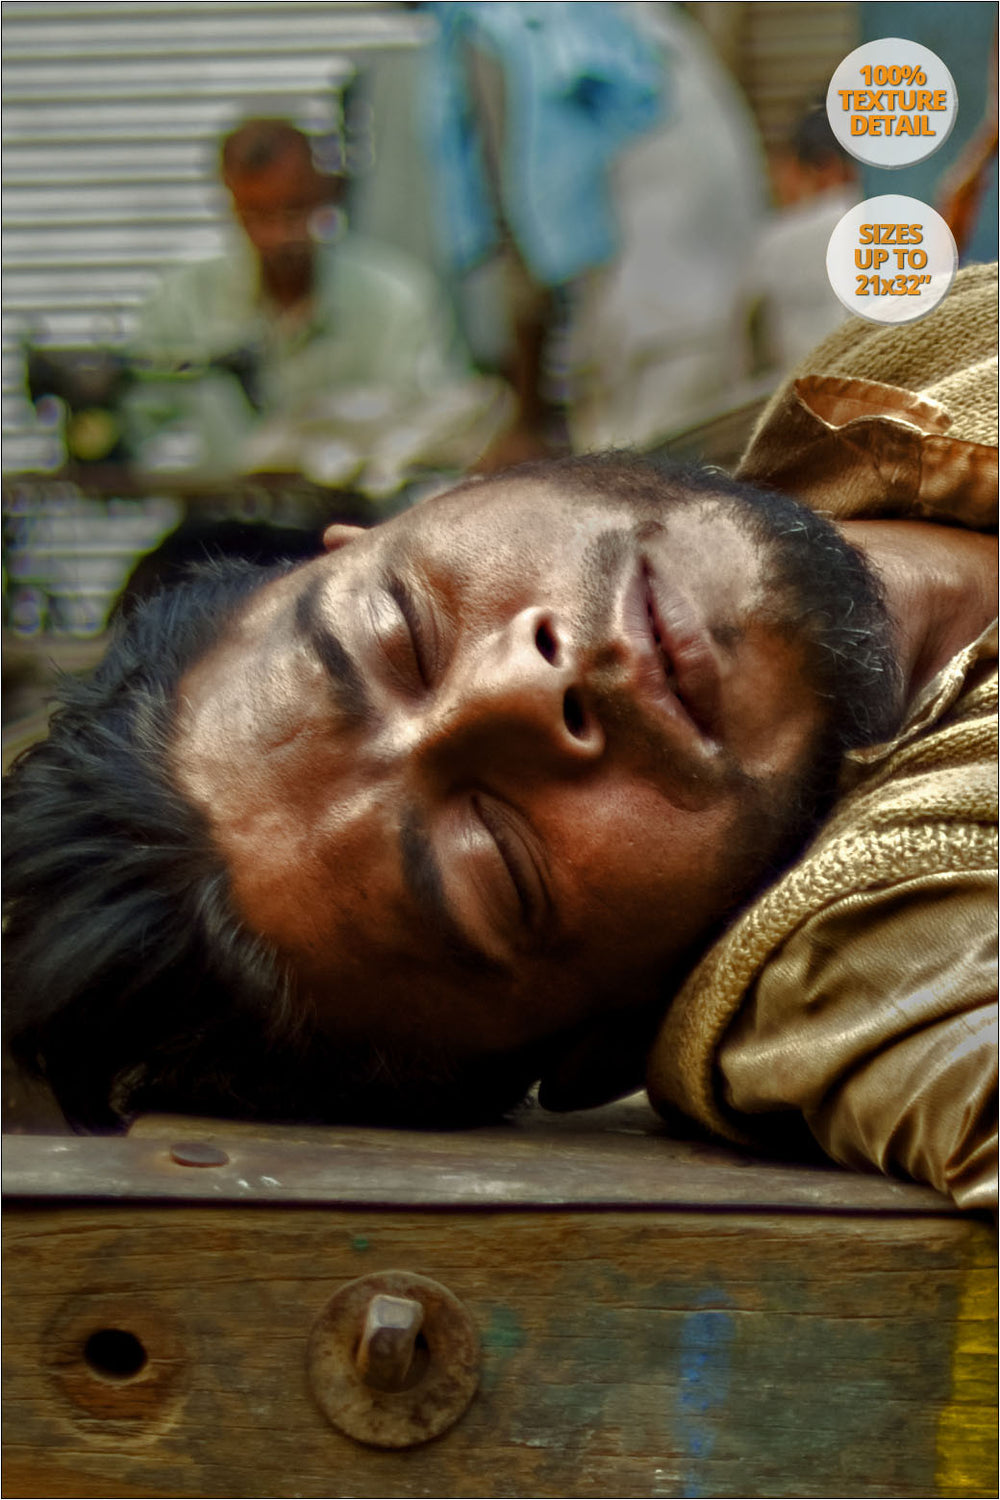 100% Detail. | Carrier taking a nap, Delhi. | Fine Art Photography.